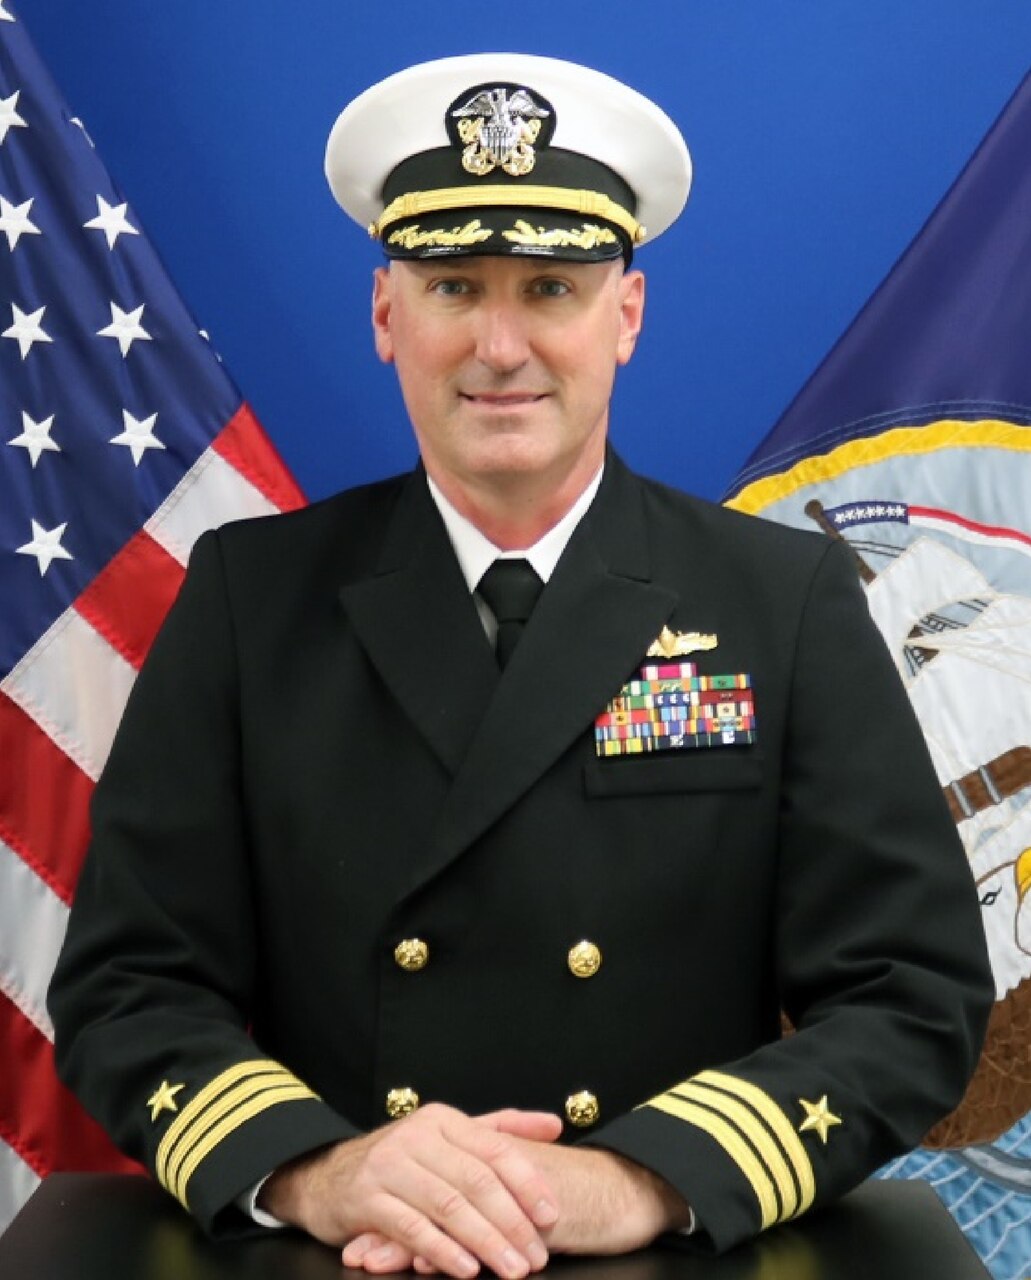 Commander William Ashley